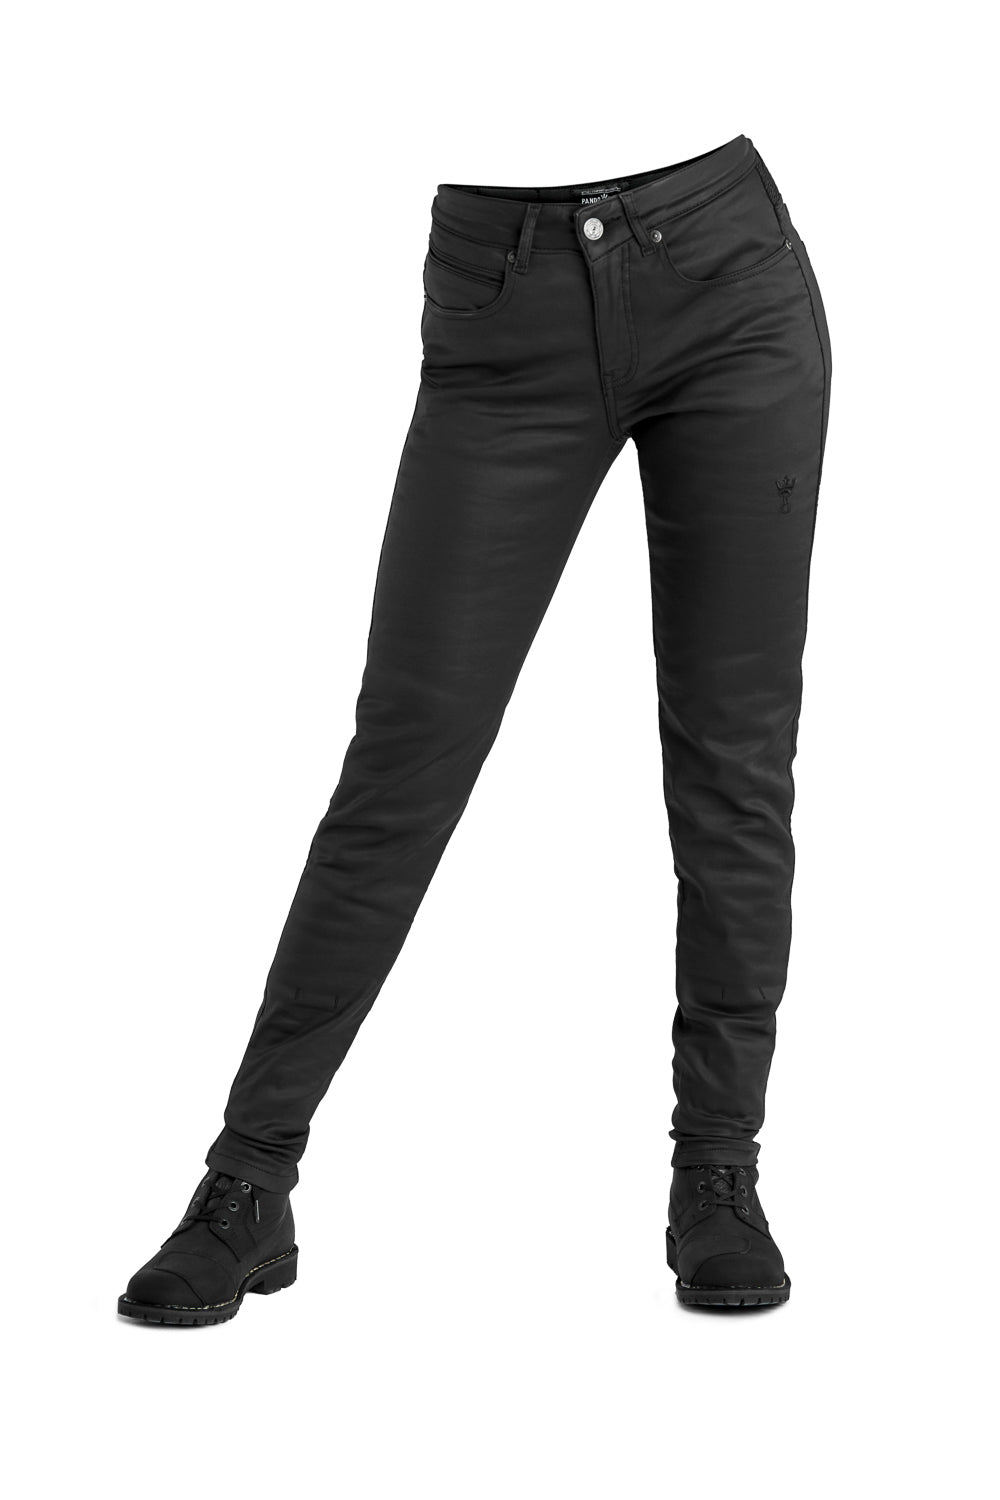 Mid-waist women's motorcycle jeans